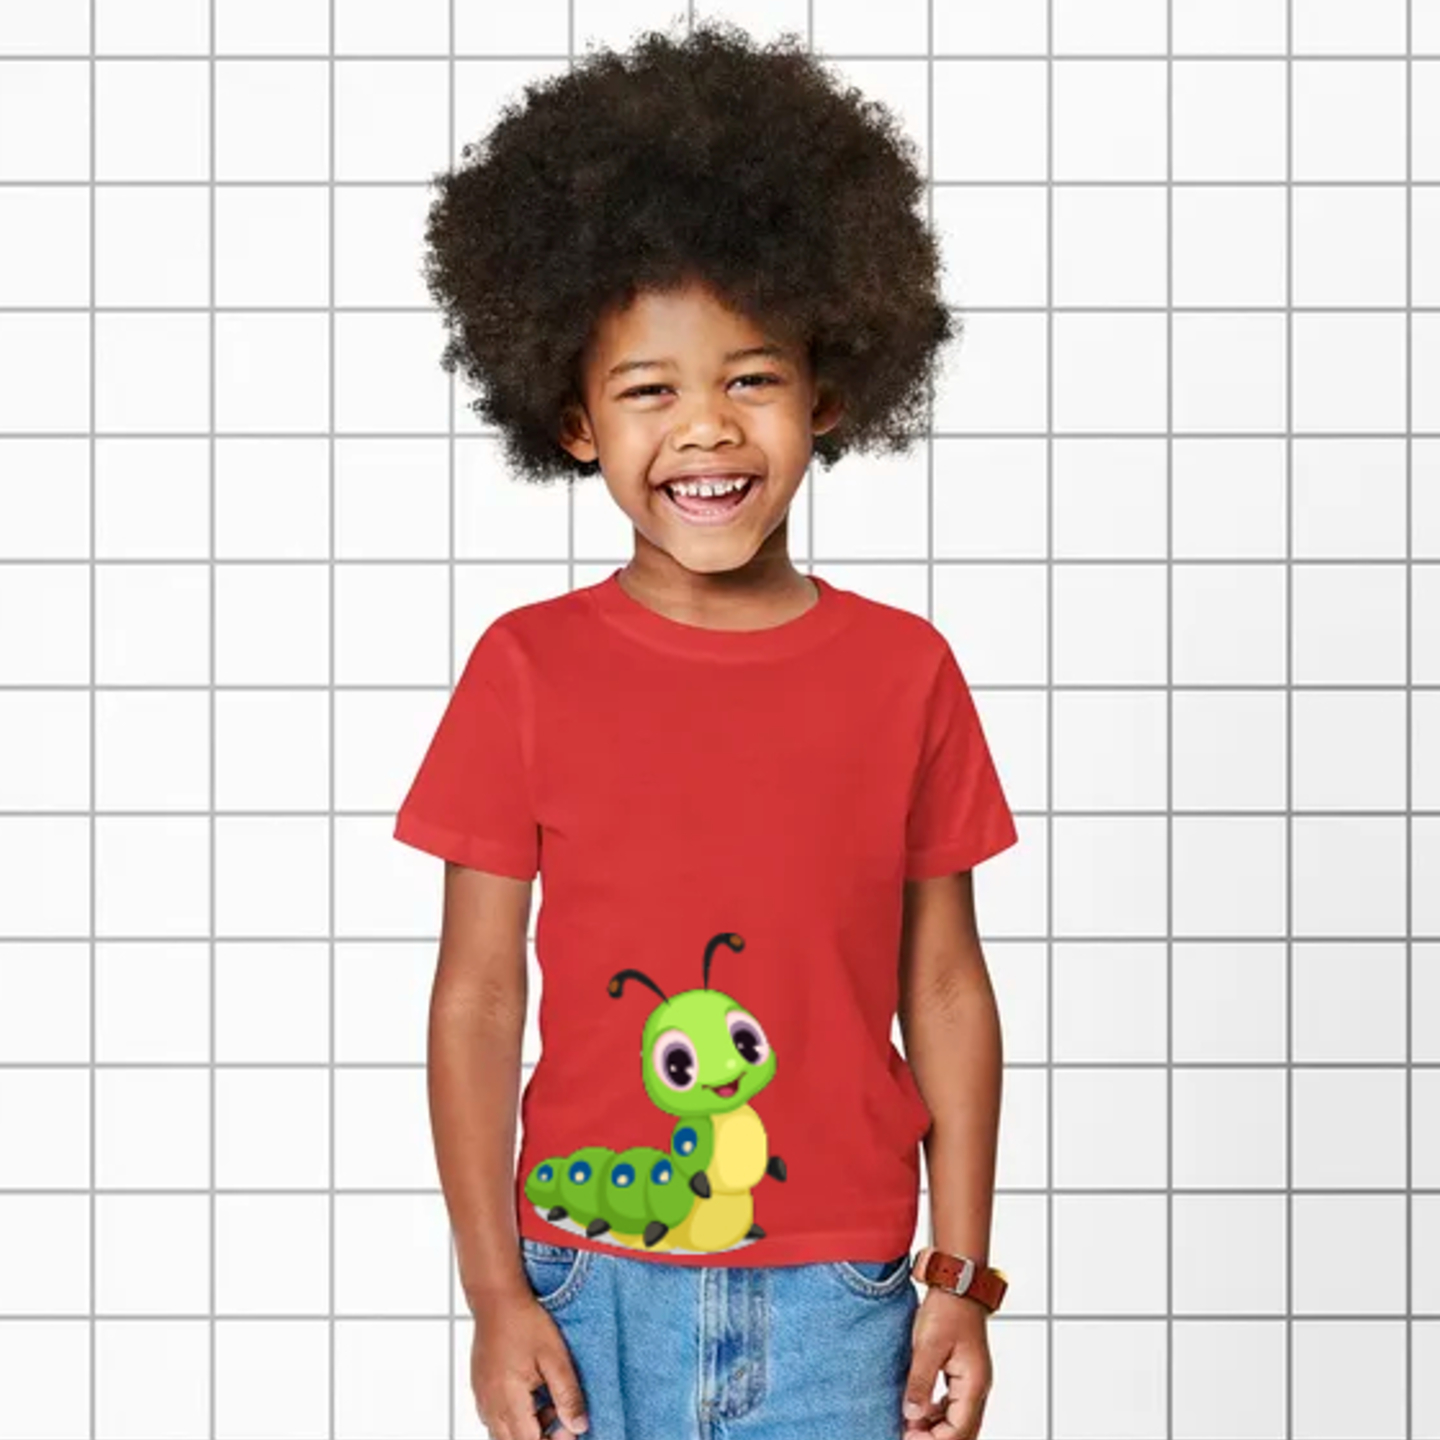 Caterpillar Printed T-Shirt For Girls